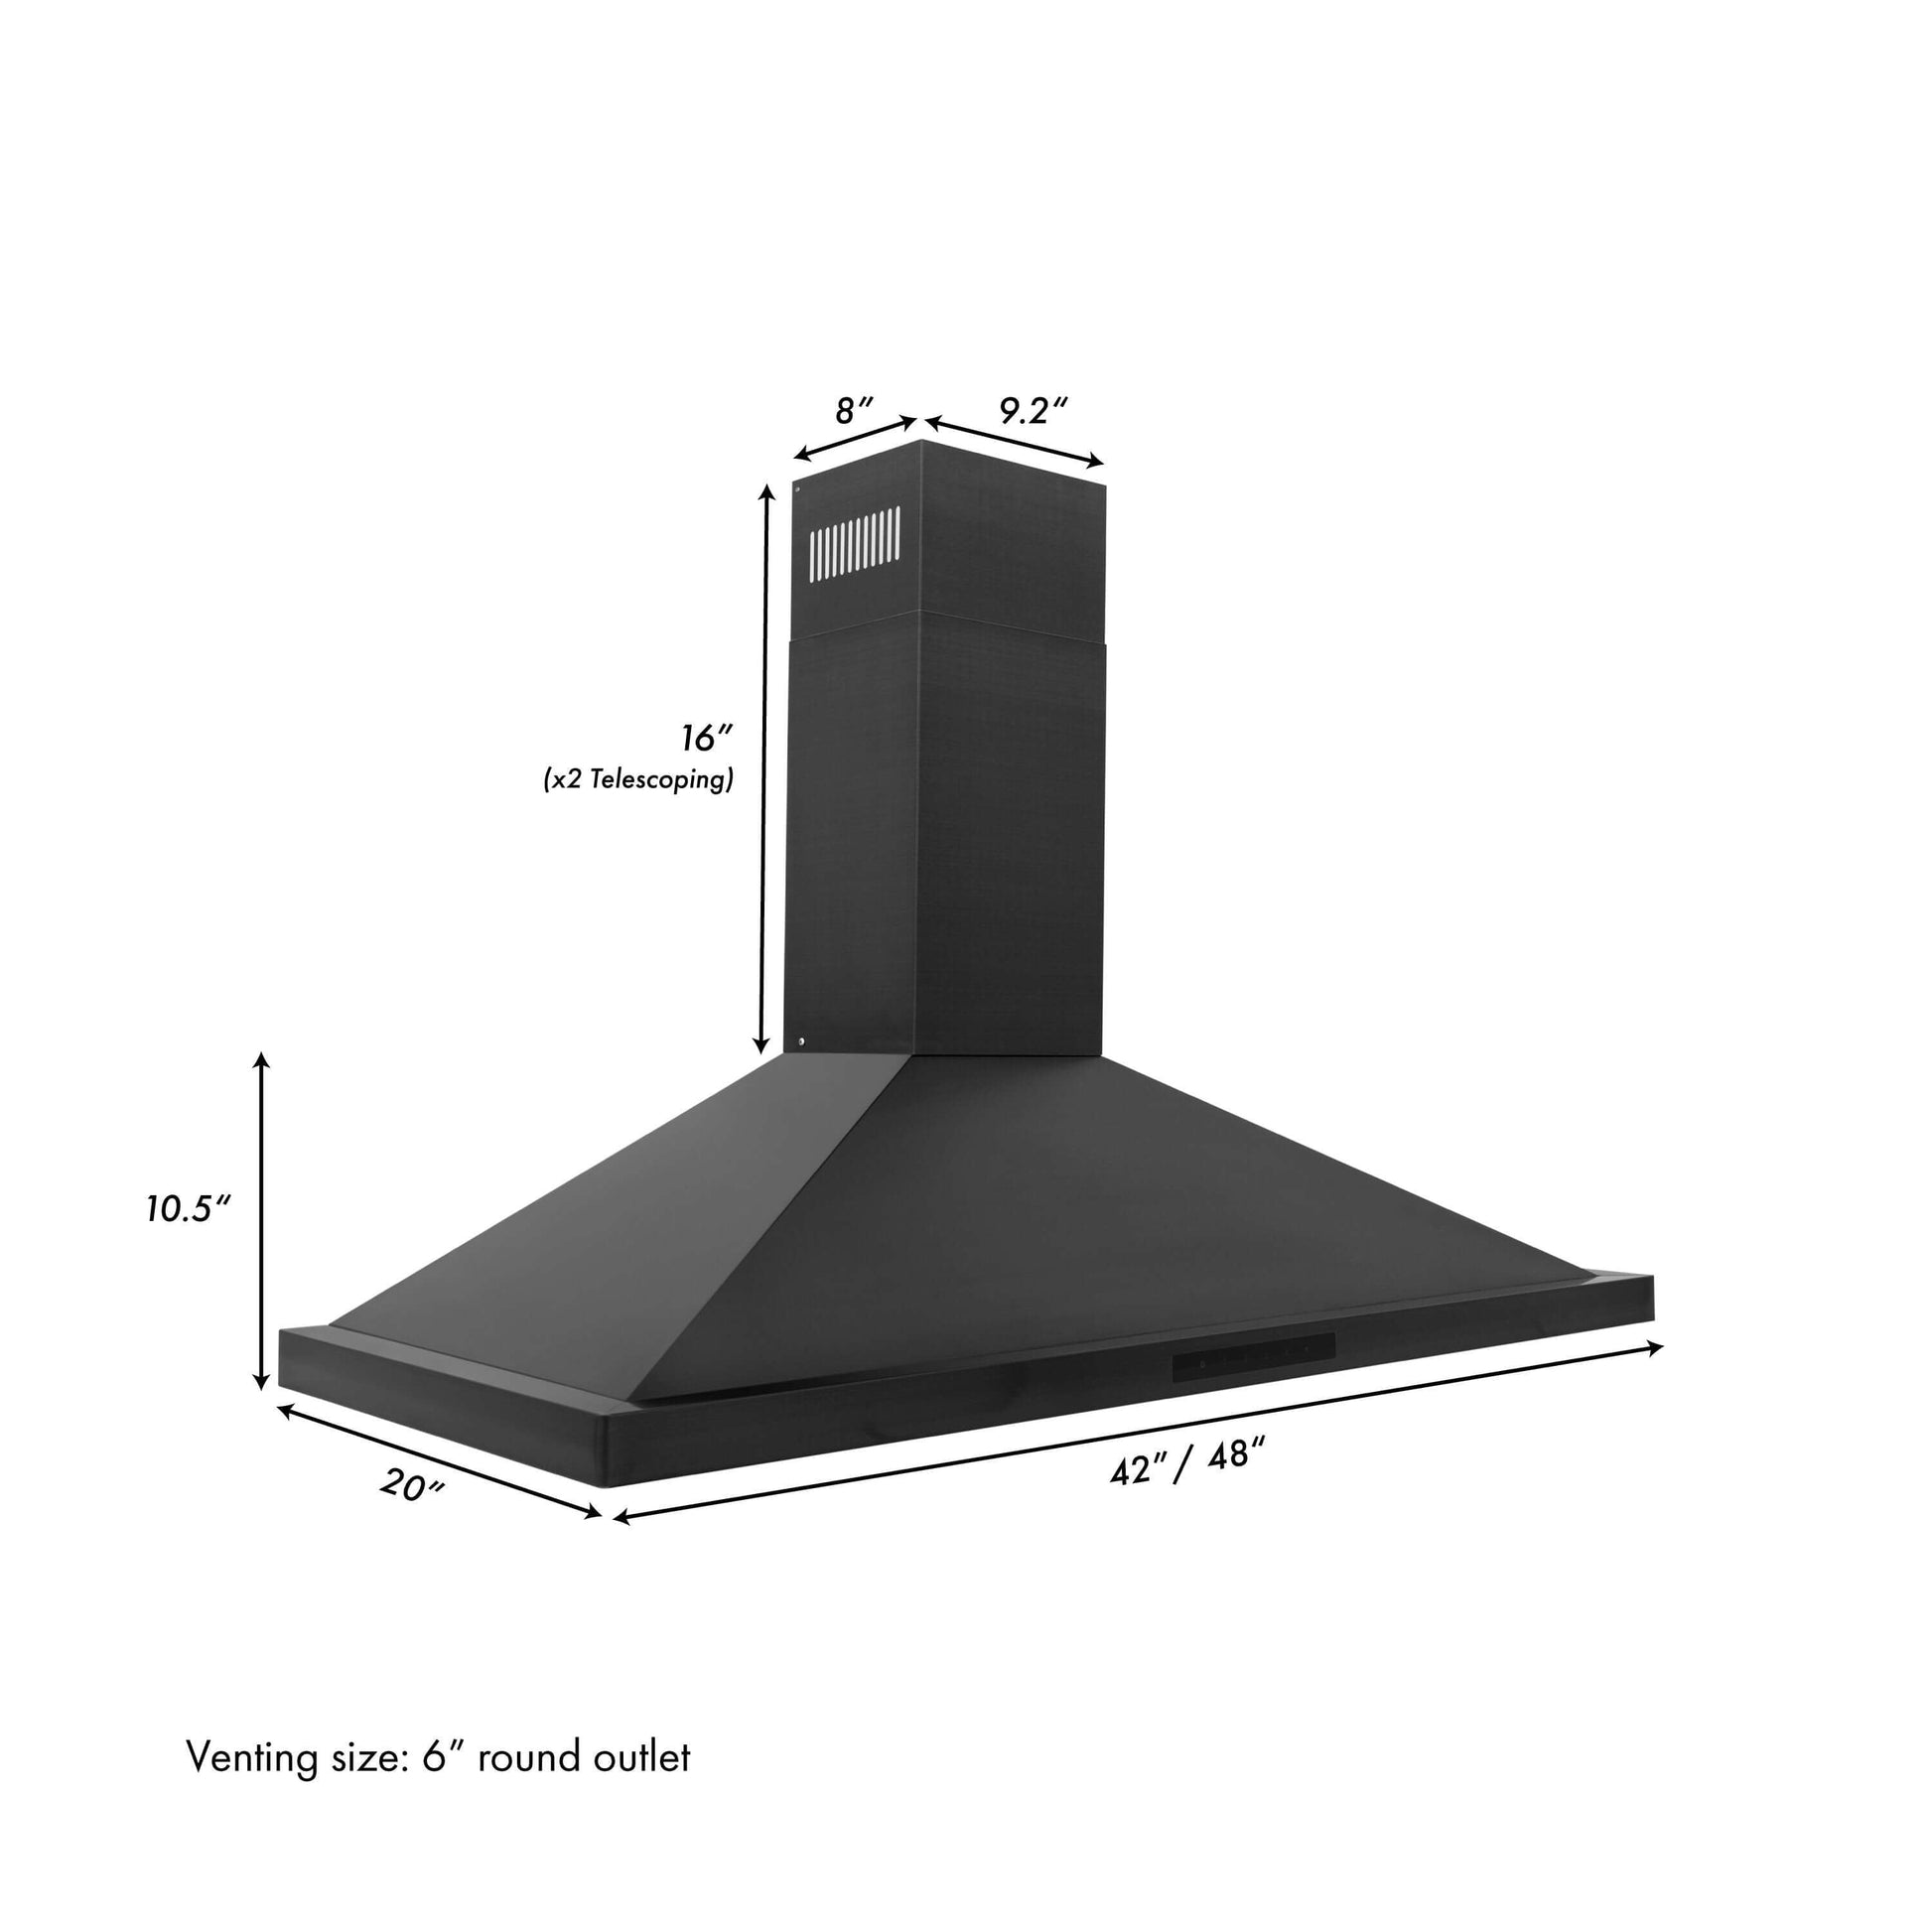 ZLINE Convertible Vent Wall Mount Range Hood in Black Stainless Steel (BSKBN) dimensional diagram with measurements.